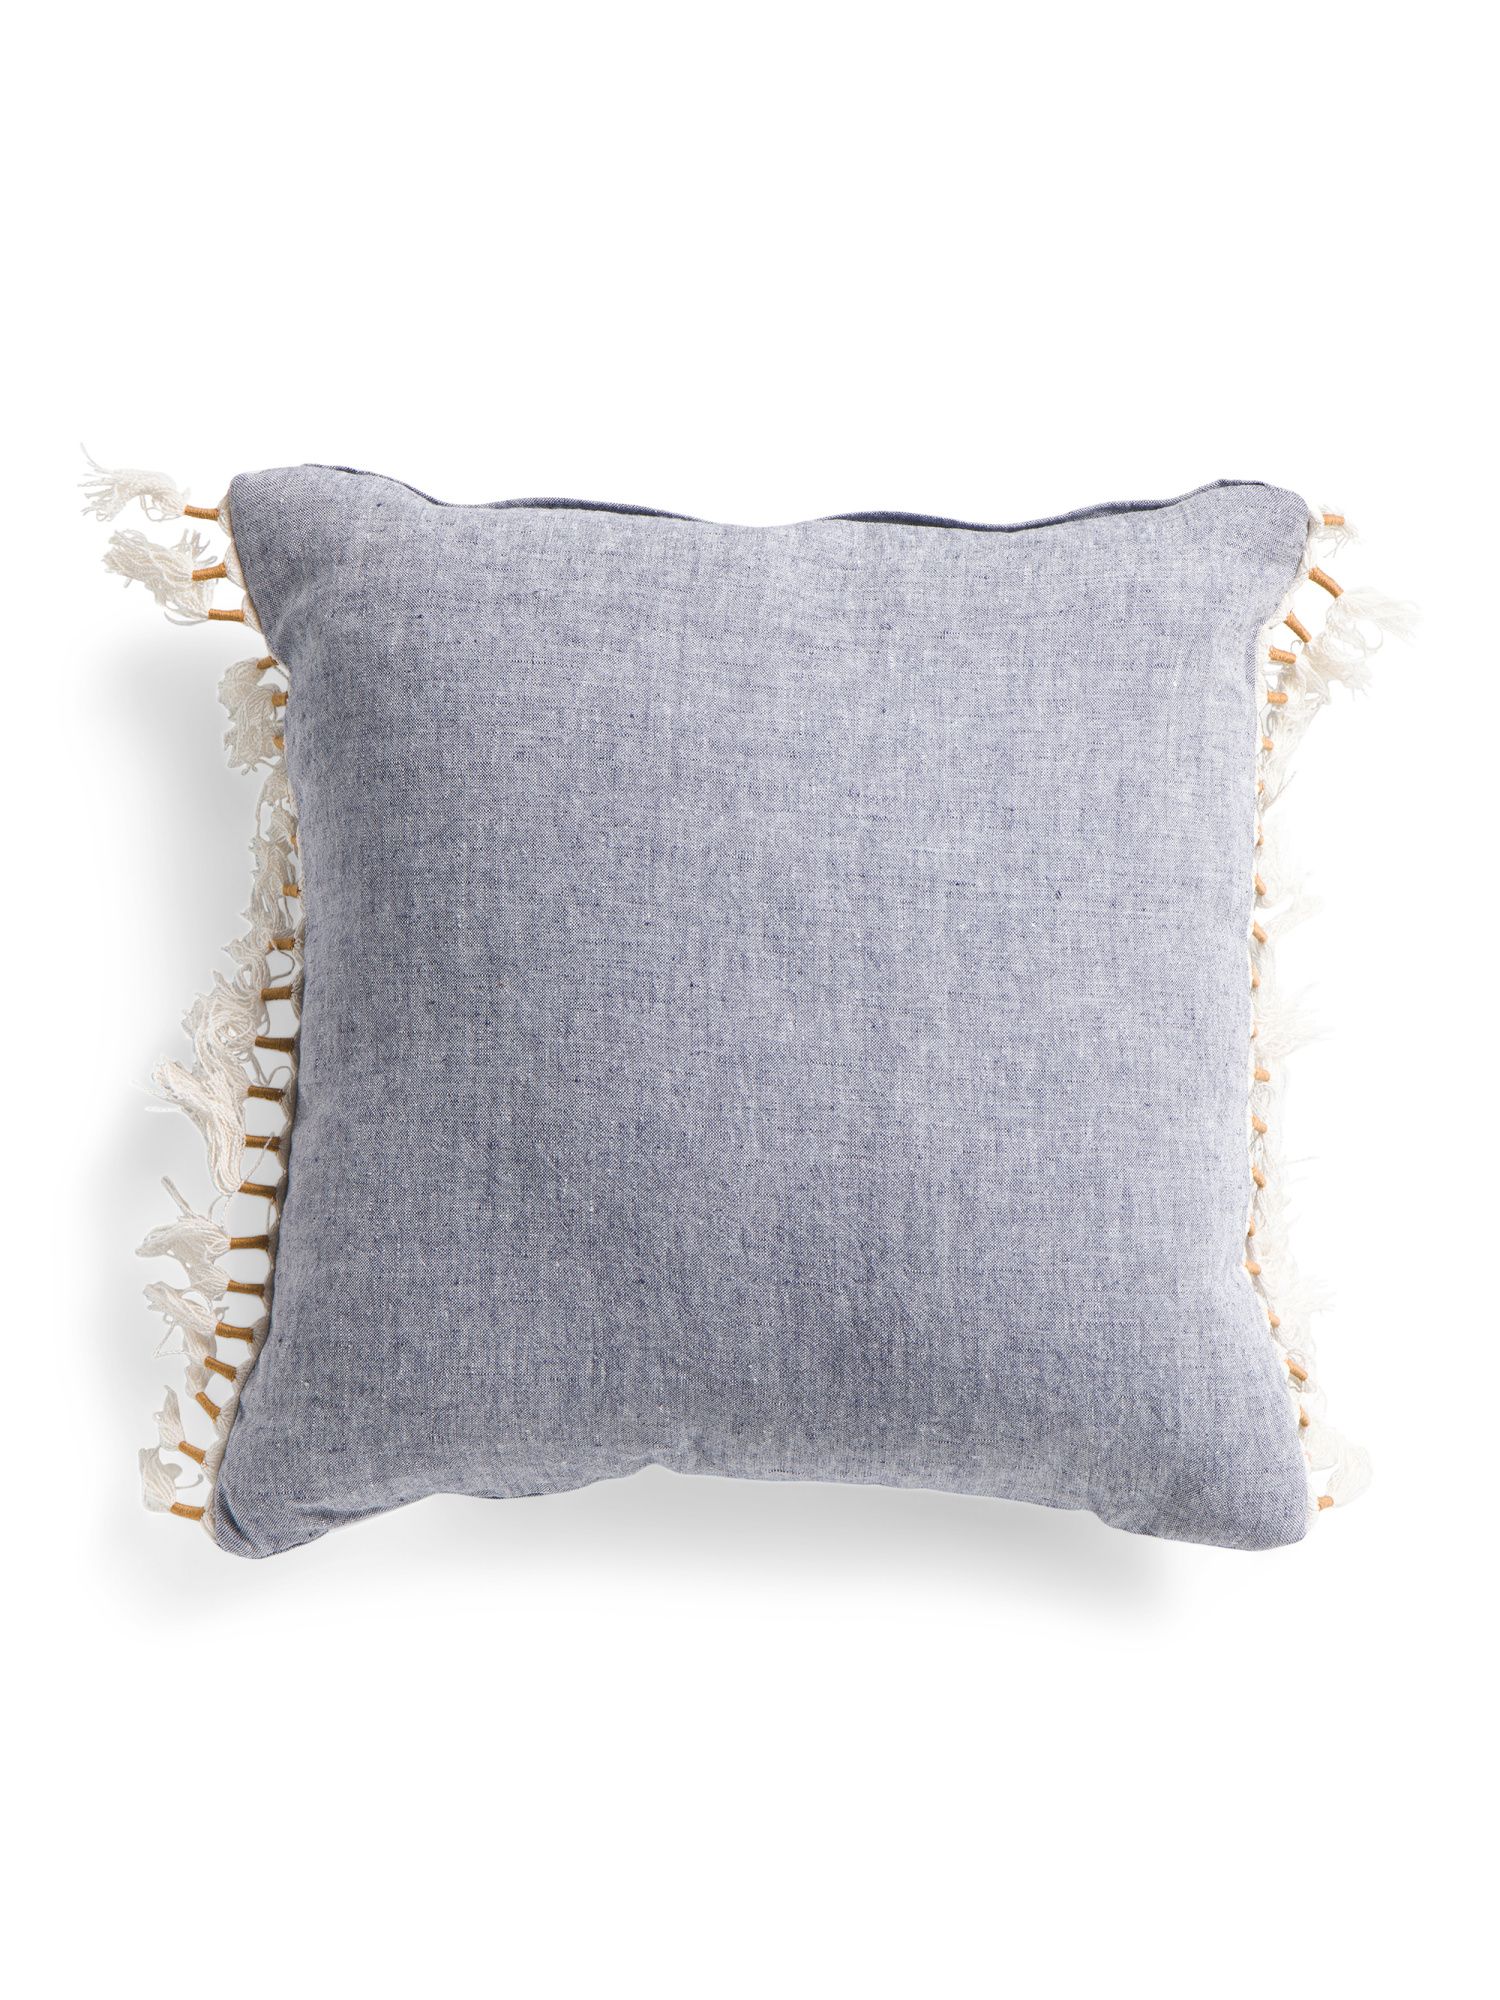 20x20 Tassel Edging Linen Pillow | Home Essentials | Marshalls | Marshalls